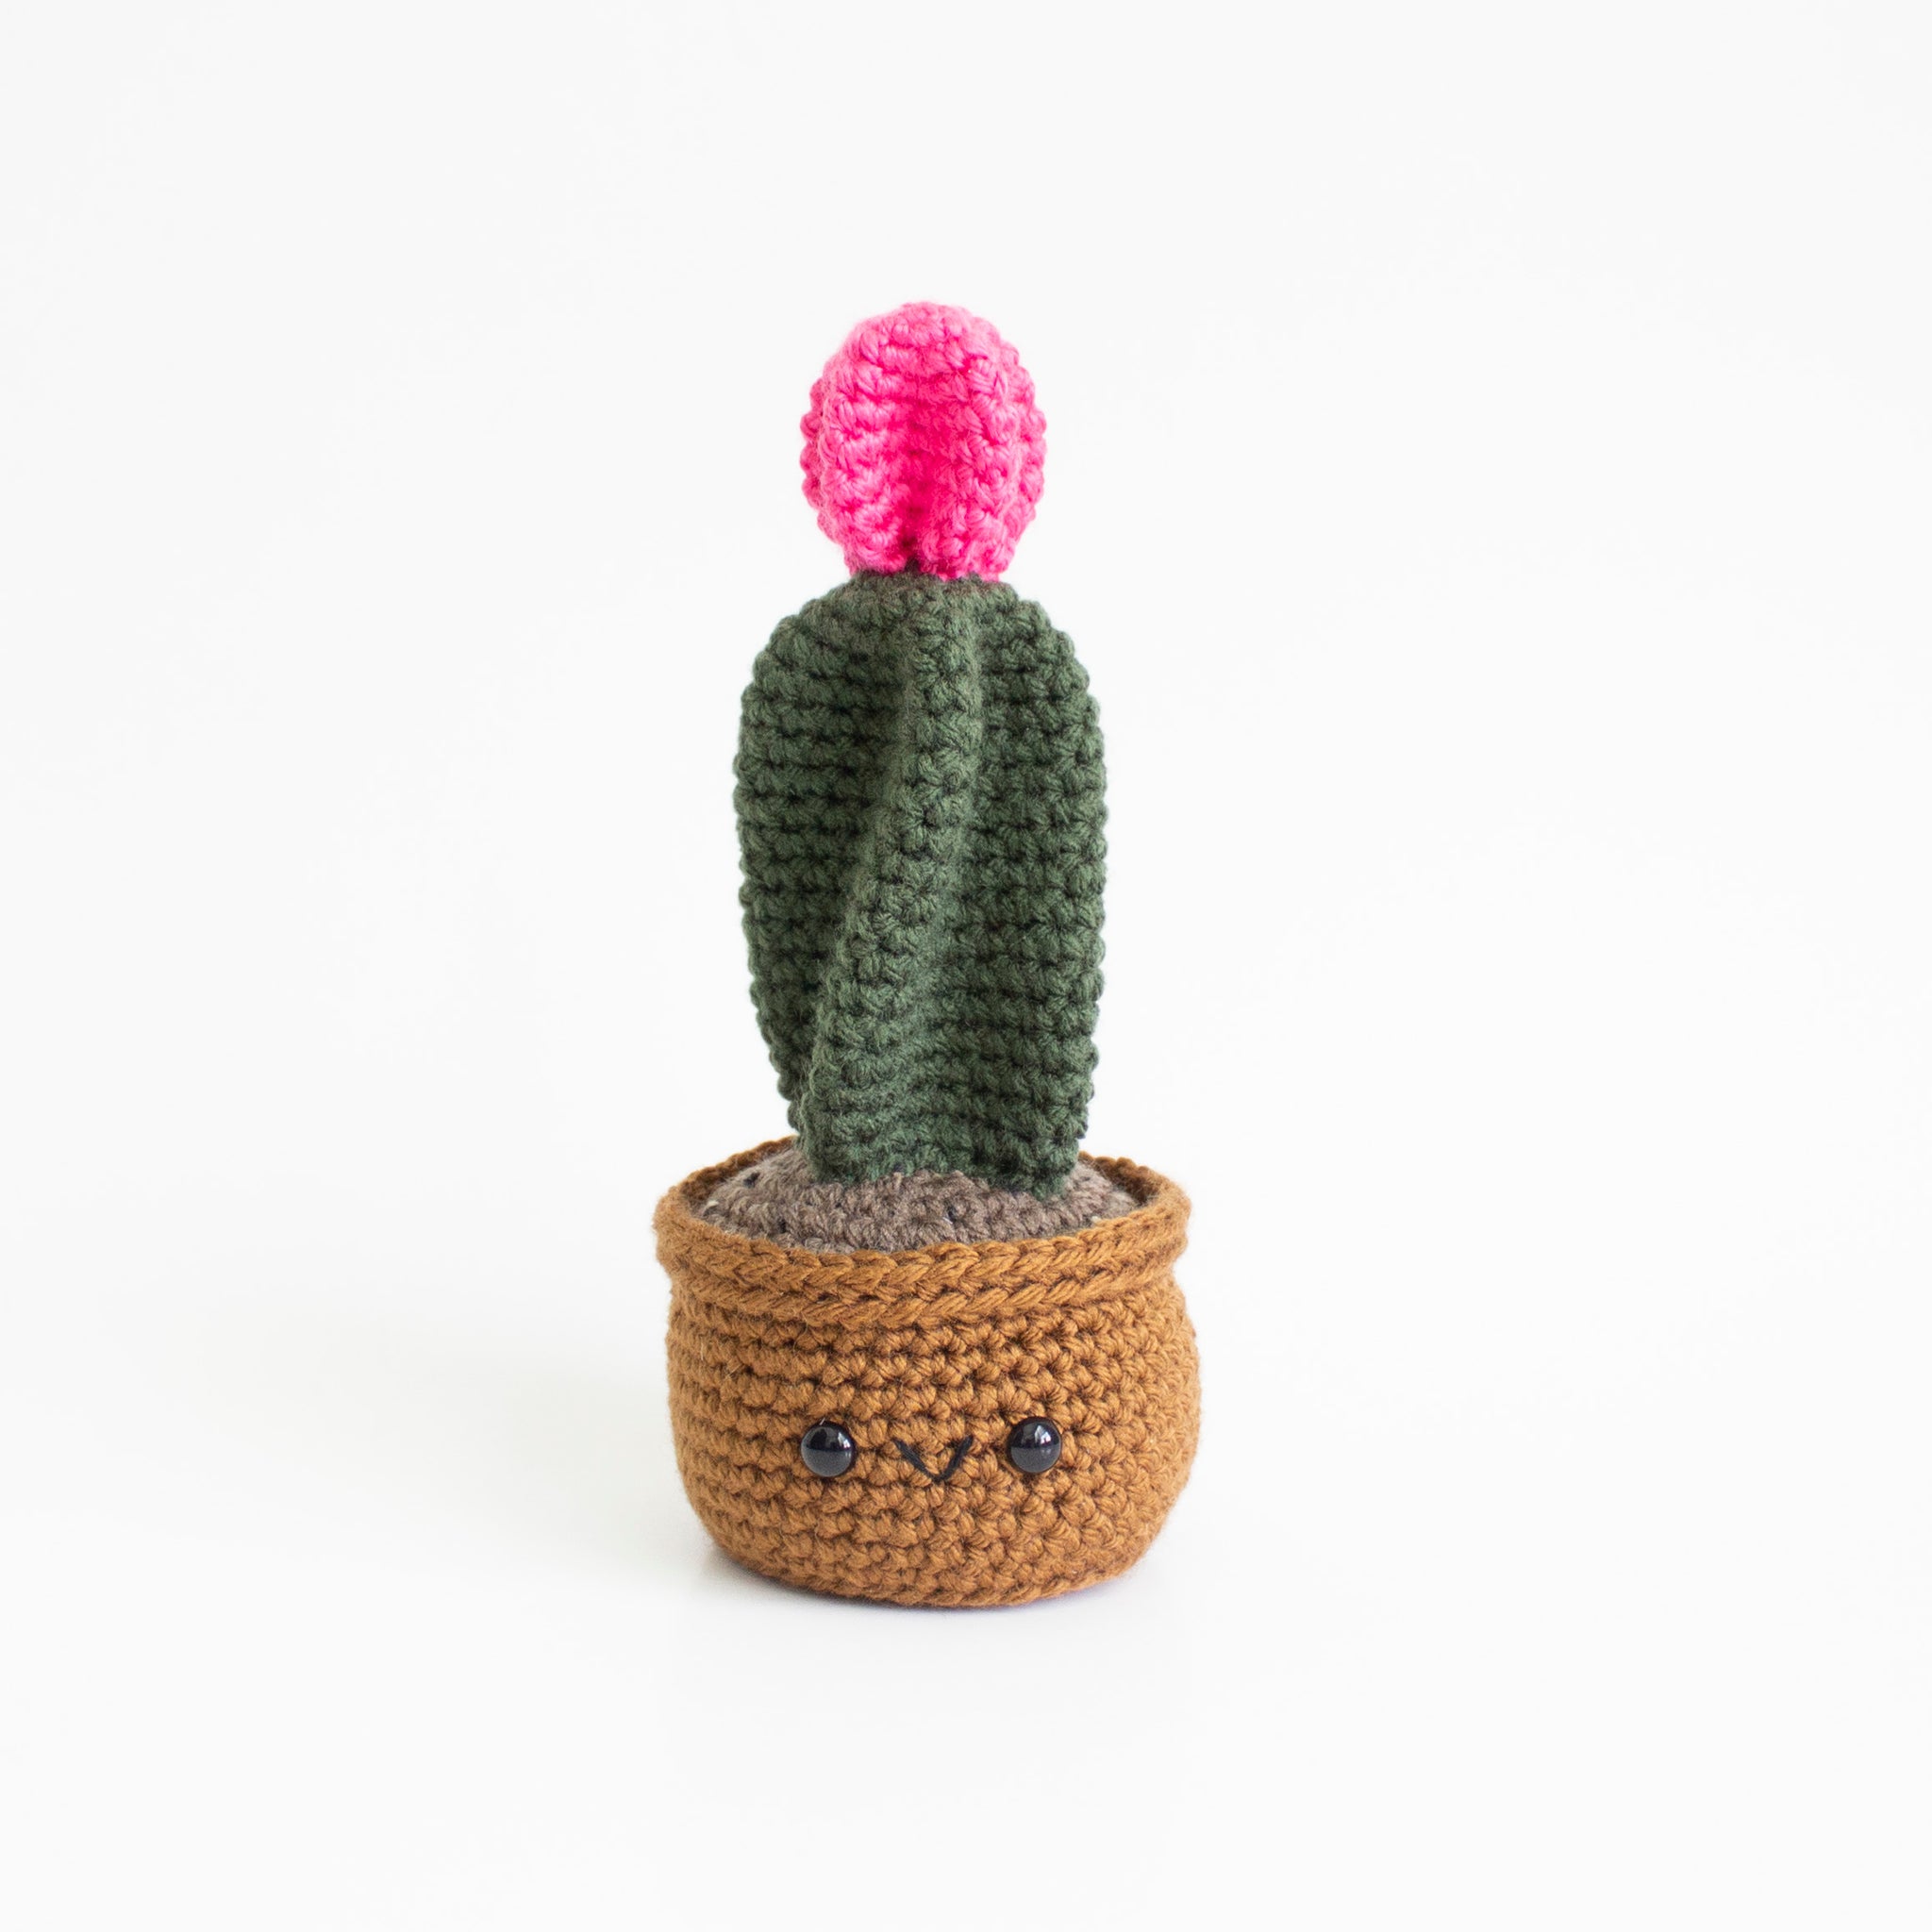 Moonball Cactus Crochet Pattern - Amigurumi Succulent